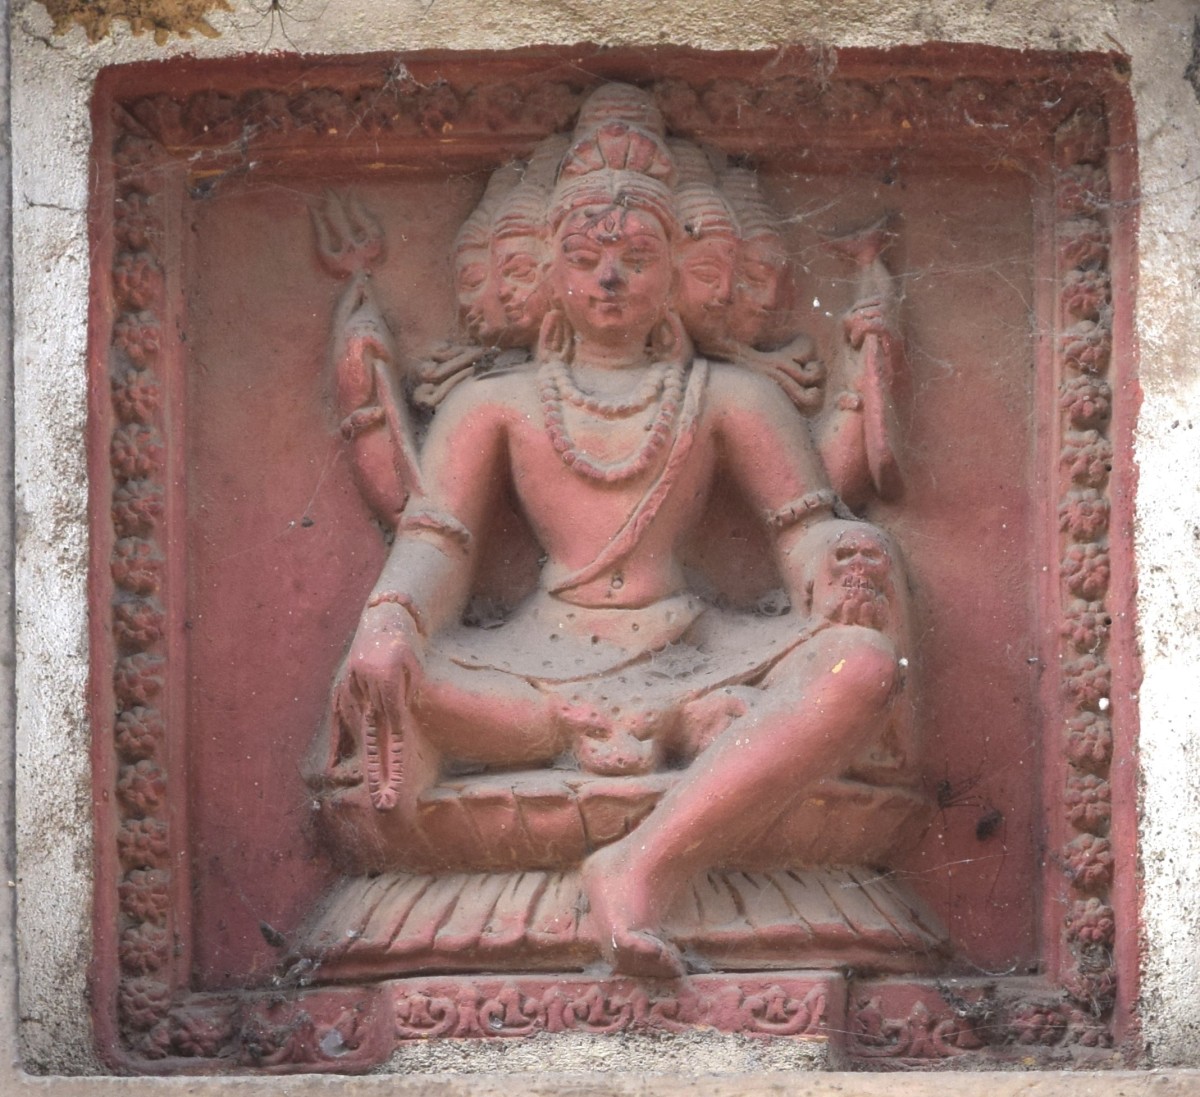 Panchanan Shiva (Shiva with 5 heads); terracotta; Jagannath temple, Sujagunj, Medinipur